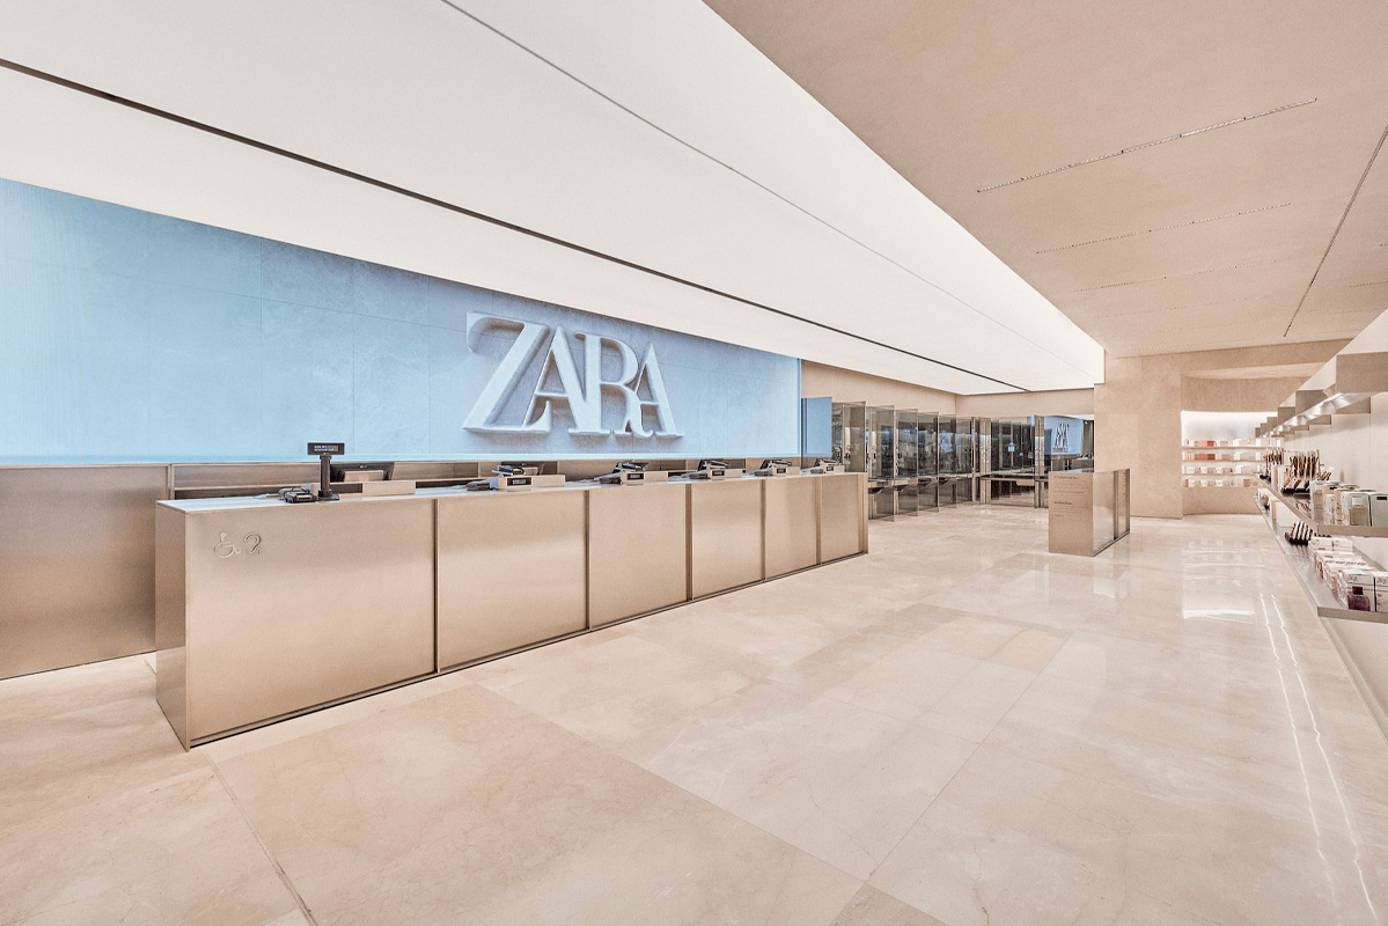 Ethics watchdog investigating Zara Canada over alleged ties to